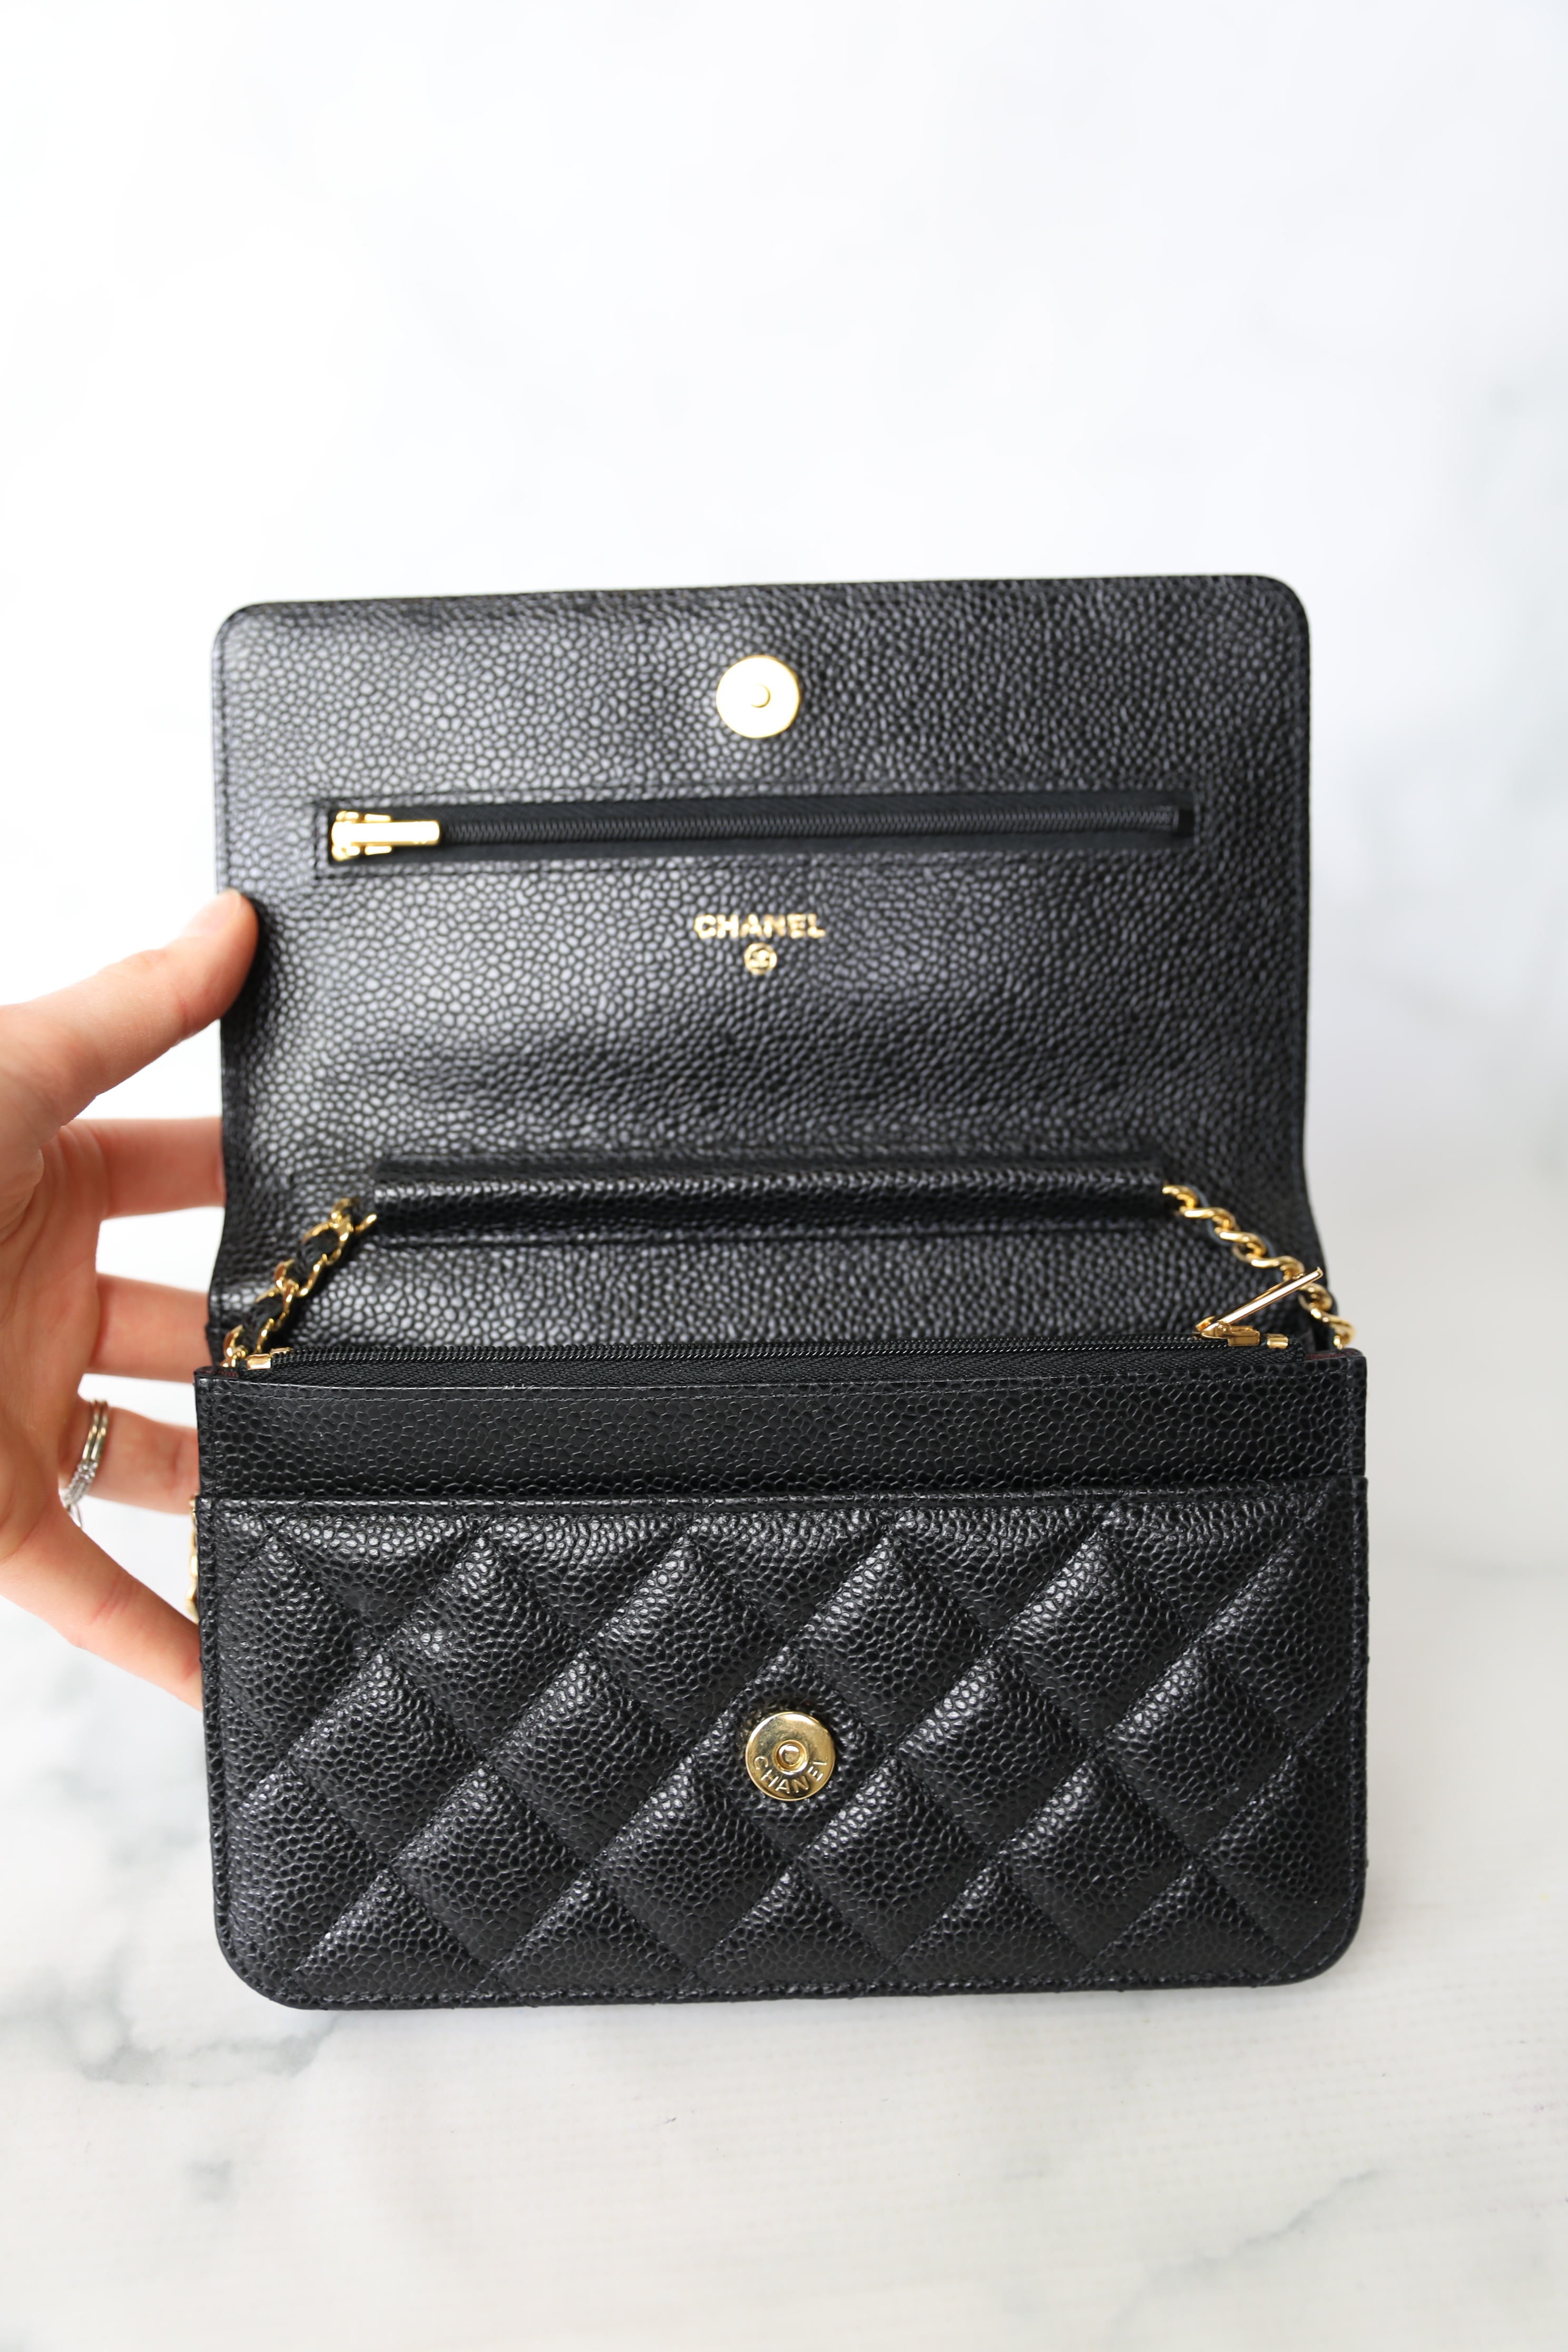 Chanel Classic Wallet on Chain, Black Caviar with Gold Hardware, Preowned  in Box WA001 - Julia Rose Boston